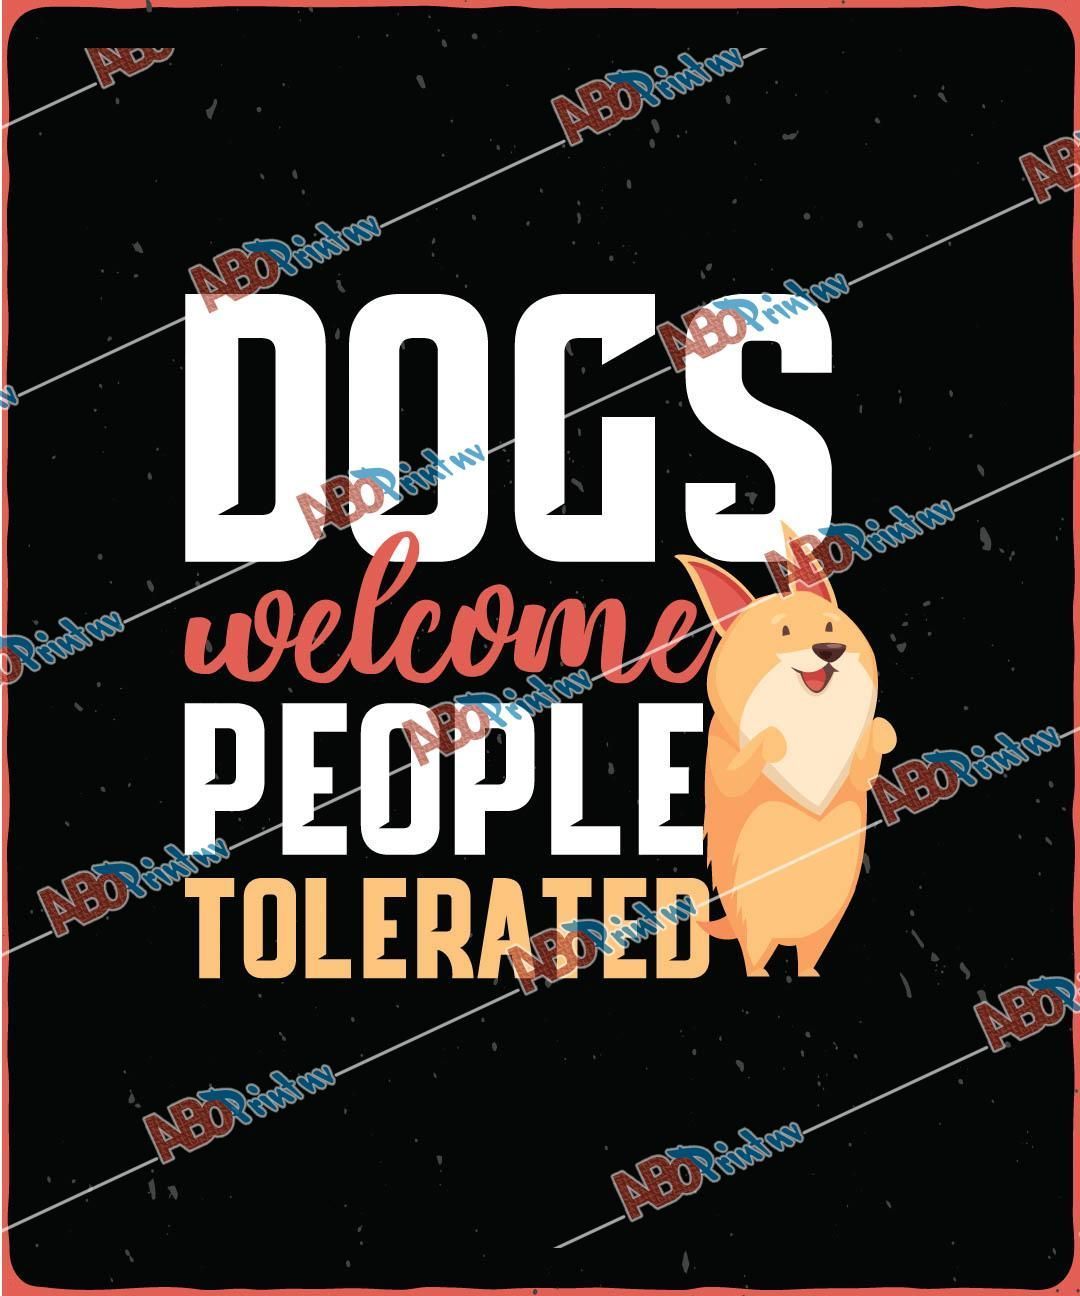 Dogs Welcome People ToleratedJPG (1).jpg